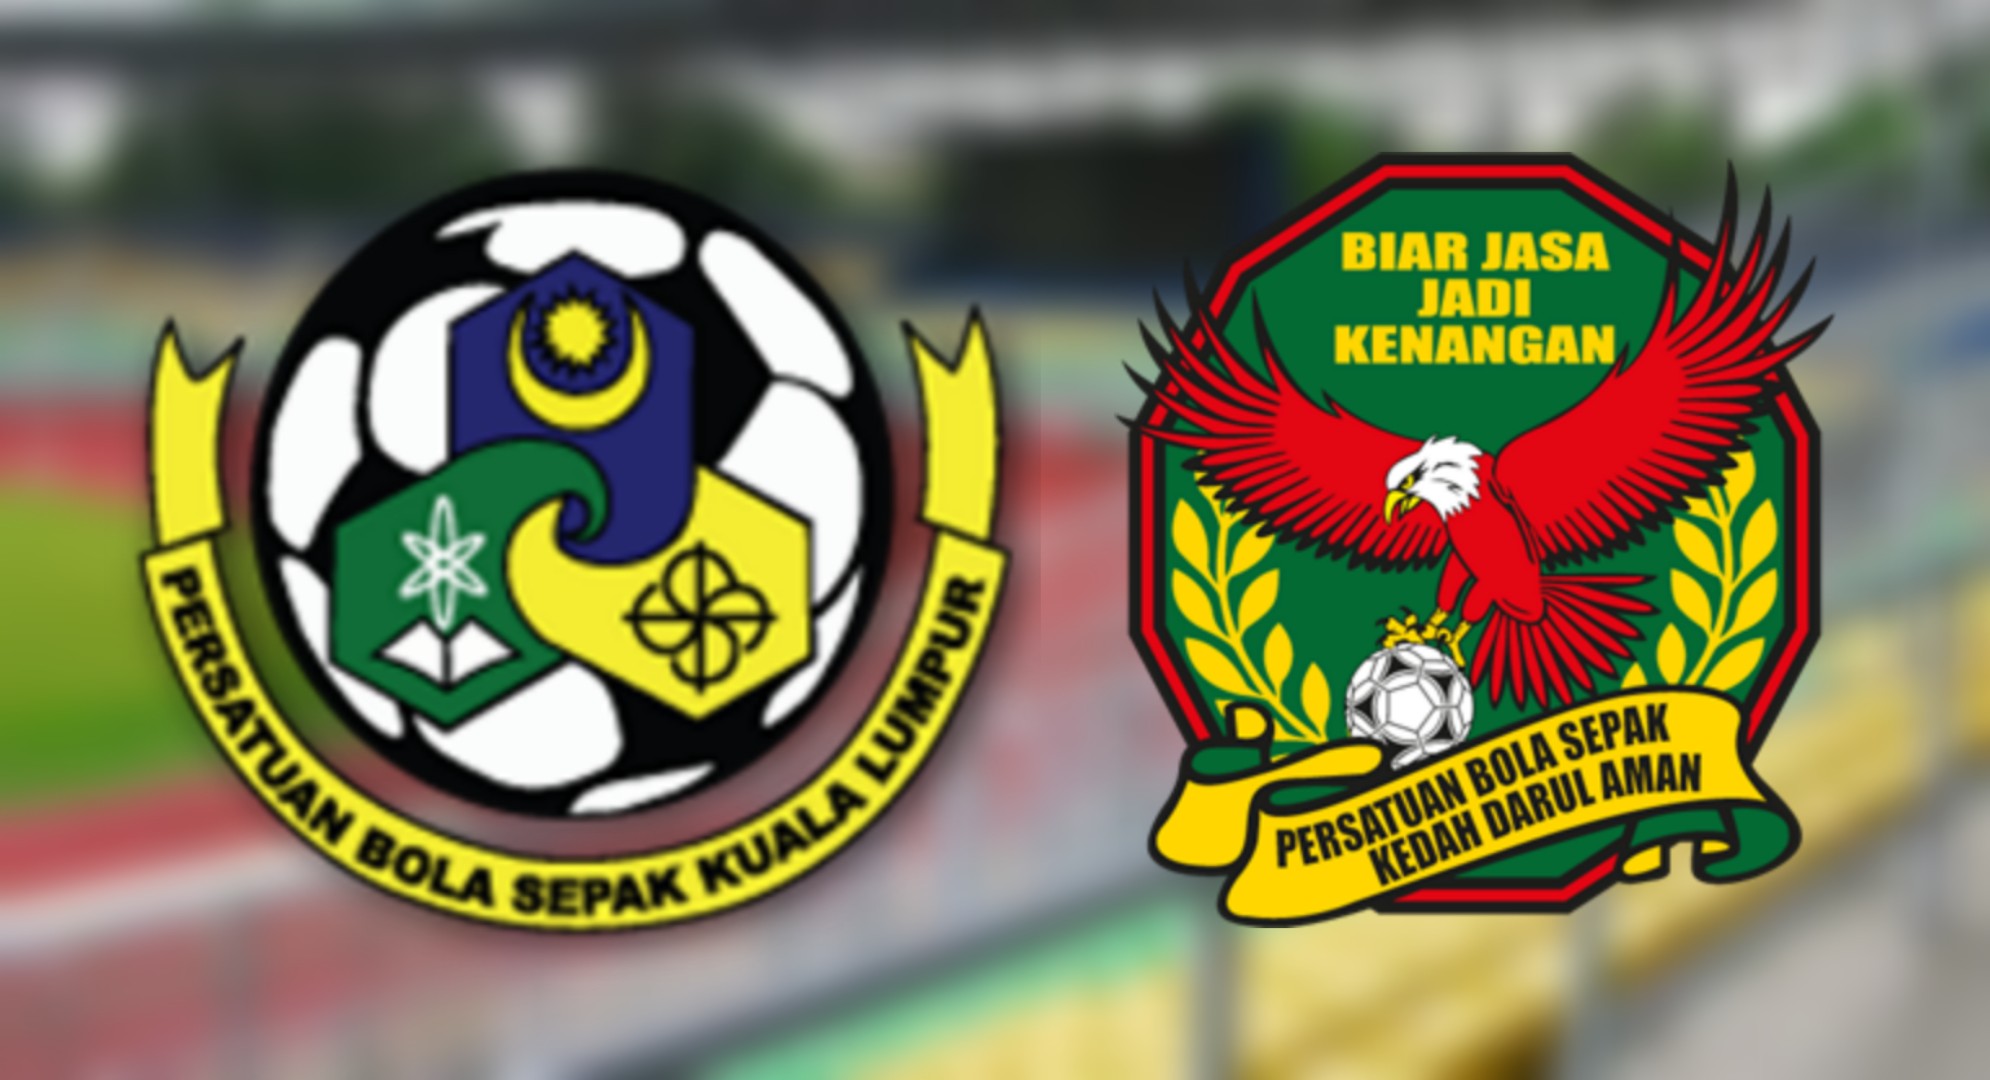 Live Streaming Kuala Lumpur vs Kedah 6.4.2019 Liga Super